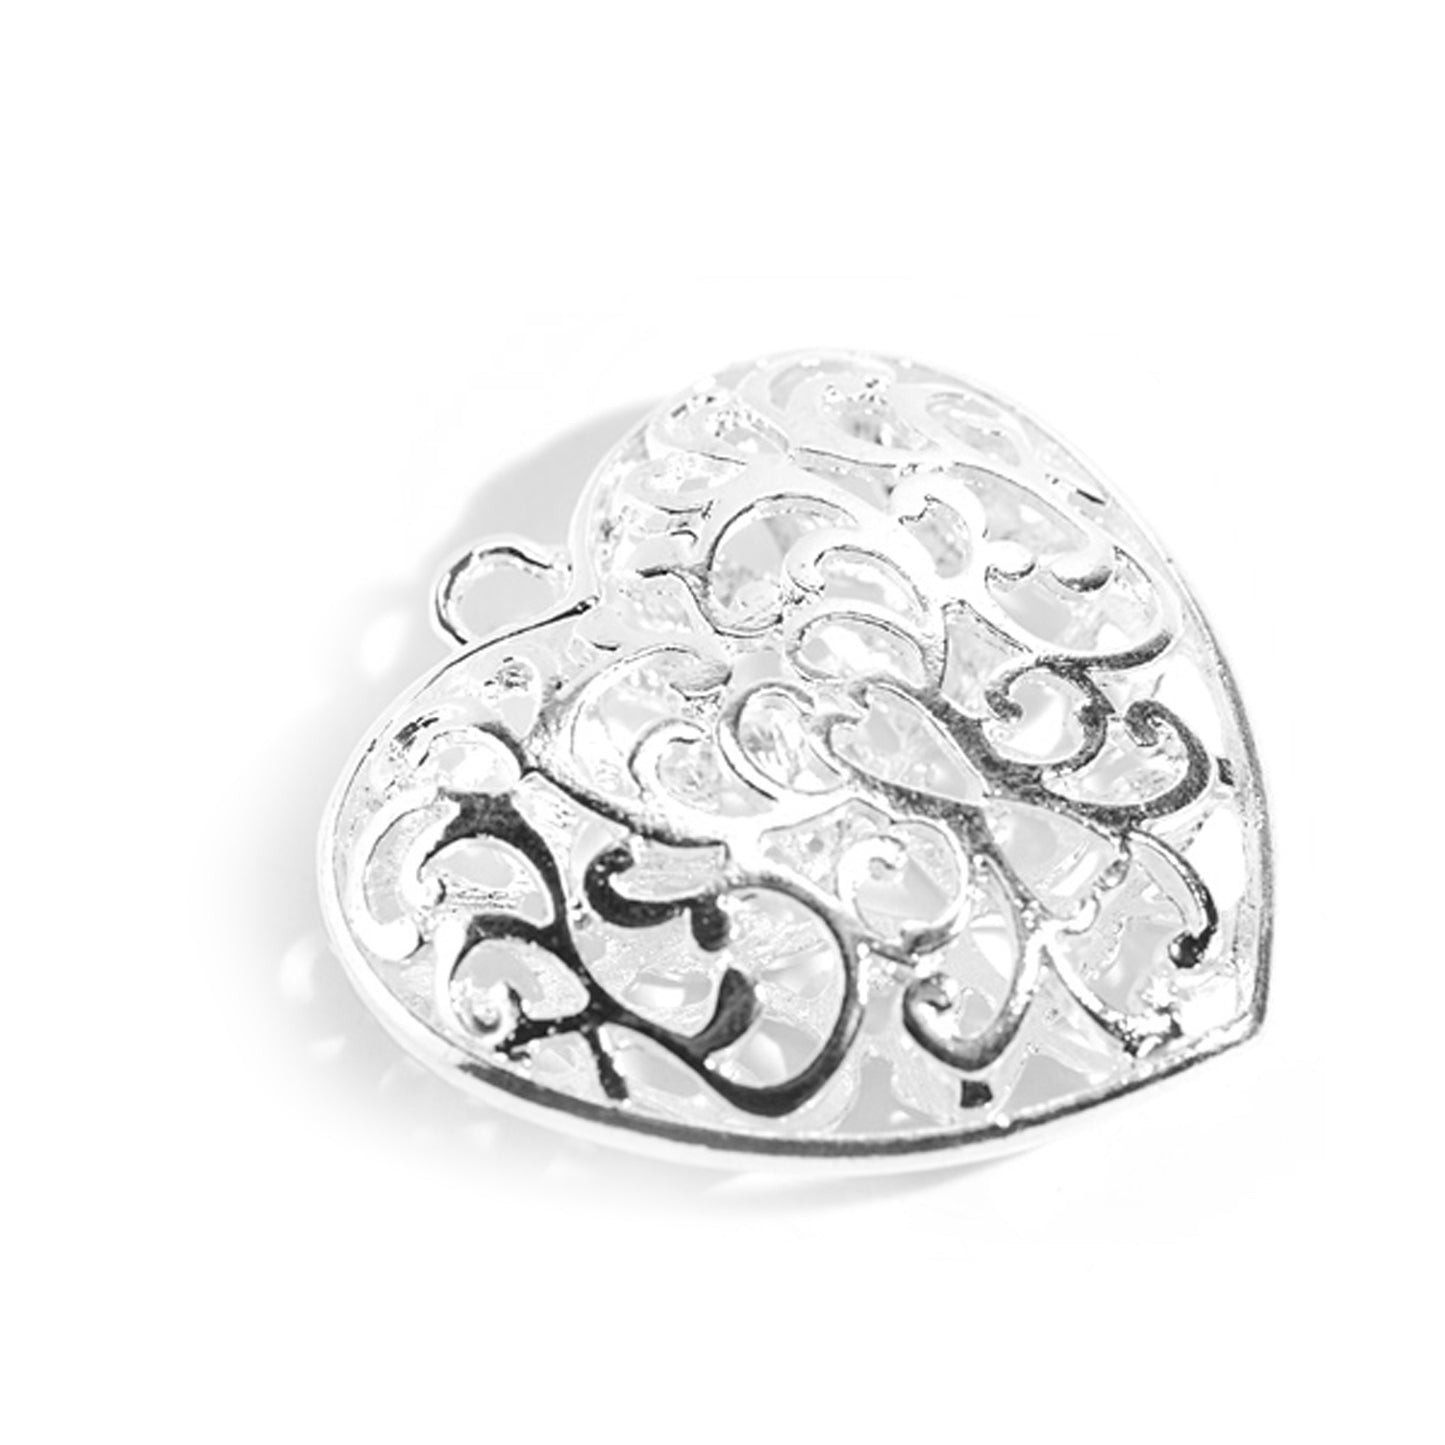 XL heart pendant / silver colored / 50 mm